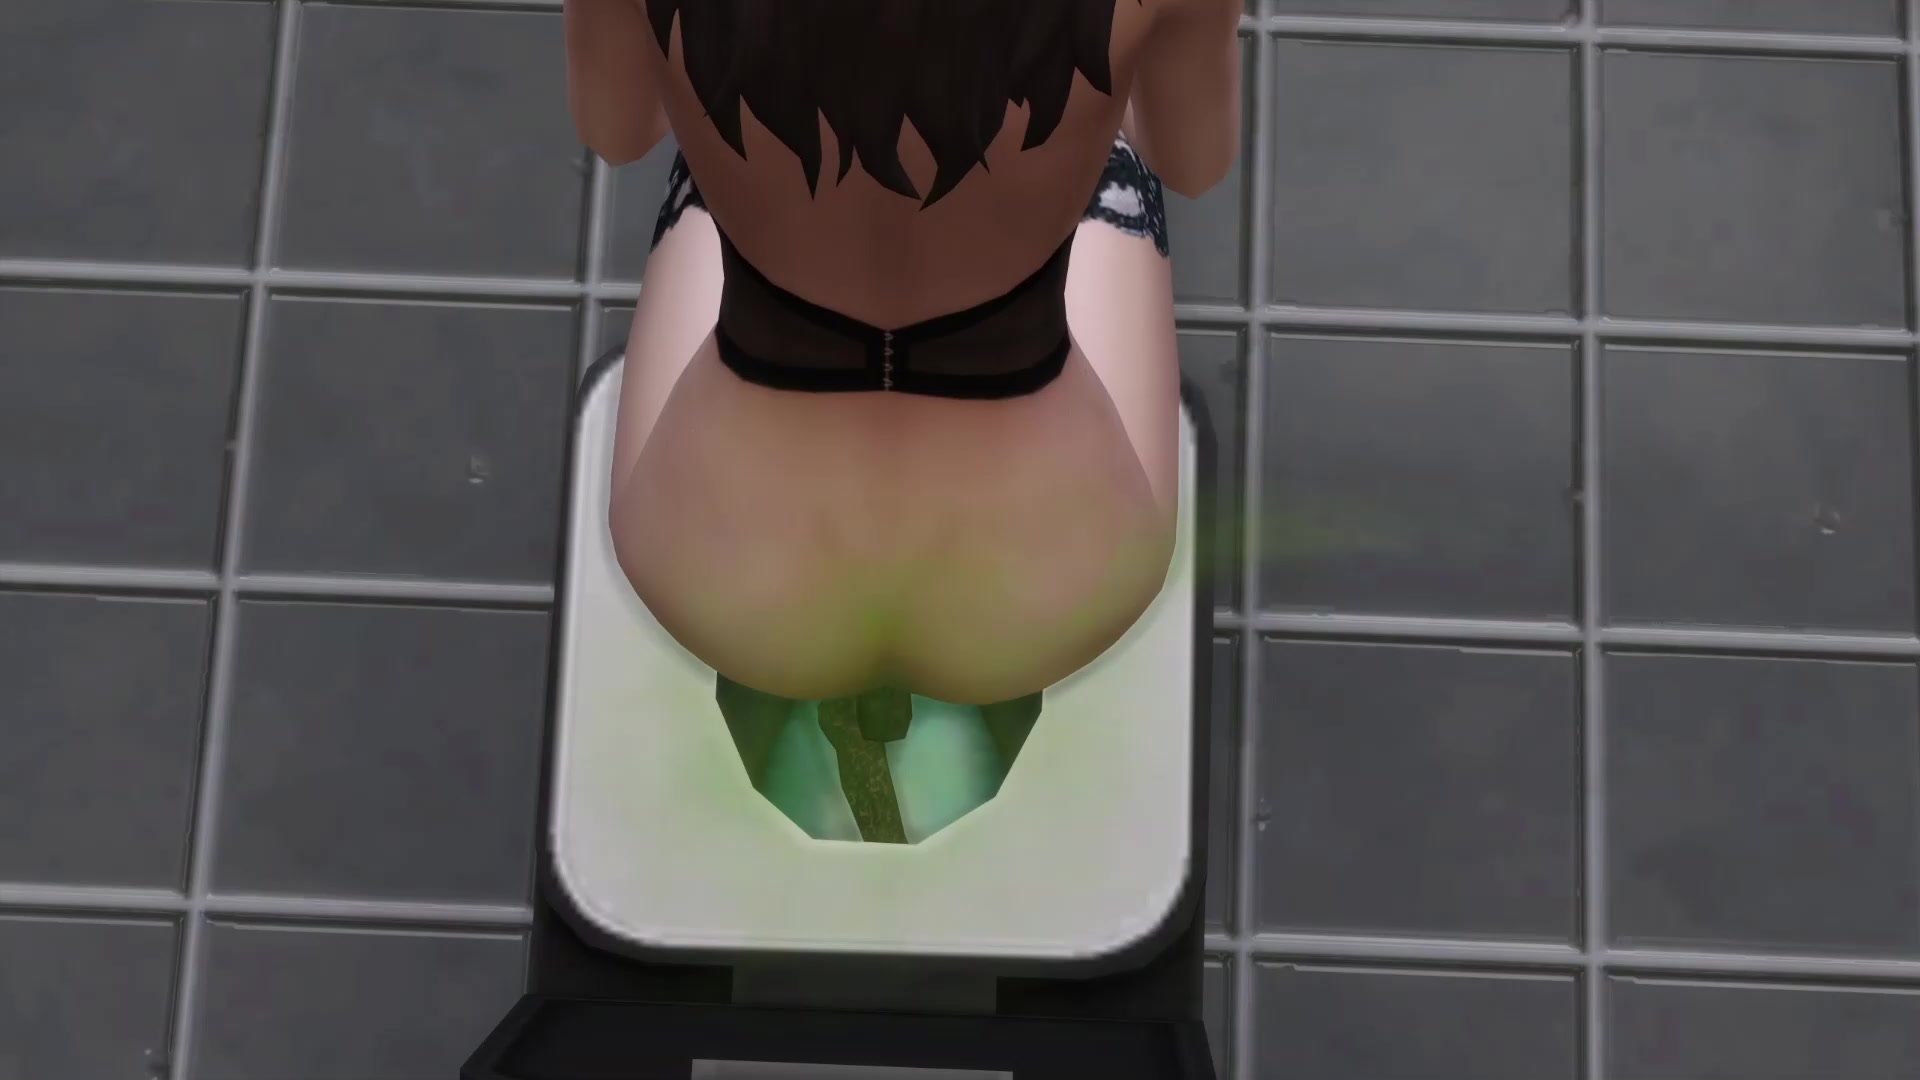 Sims 4 girl takes huge shit in toilet